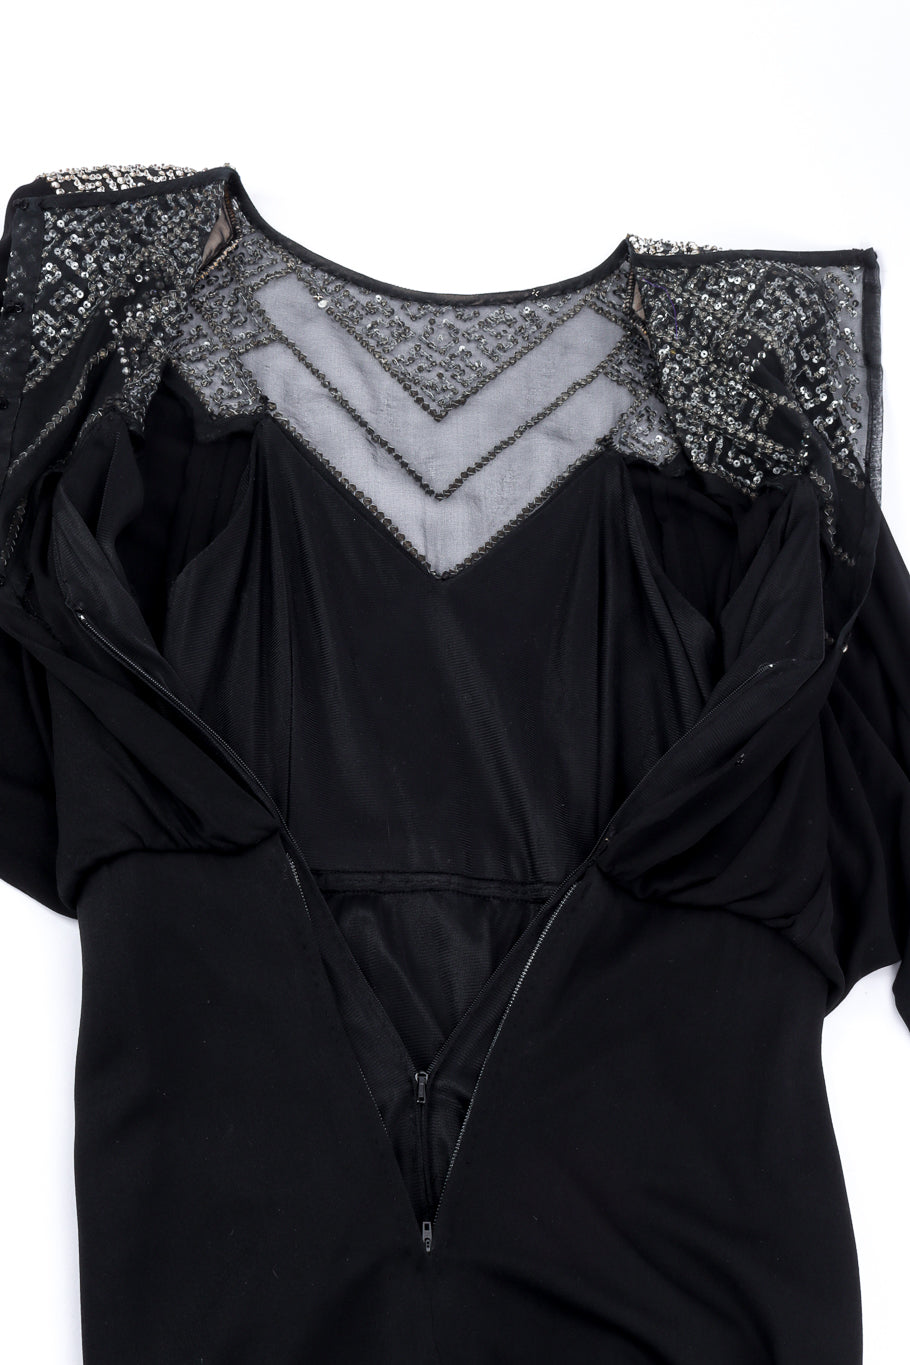 Beaded Blouson Dolman Dress by Victoria Royal unzipped back @recessla